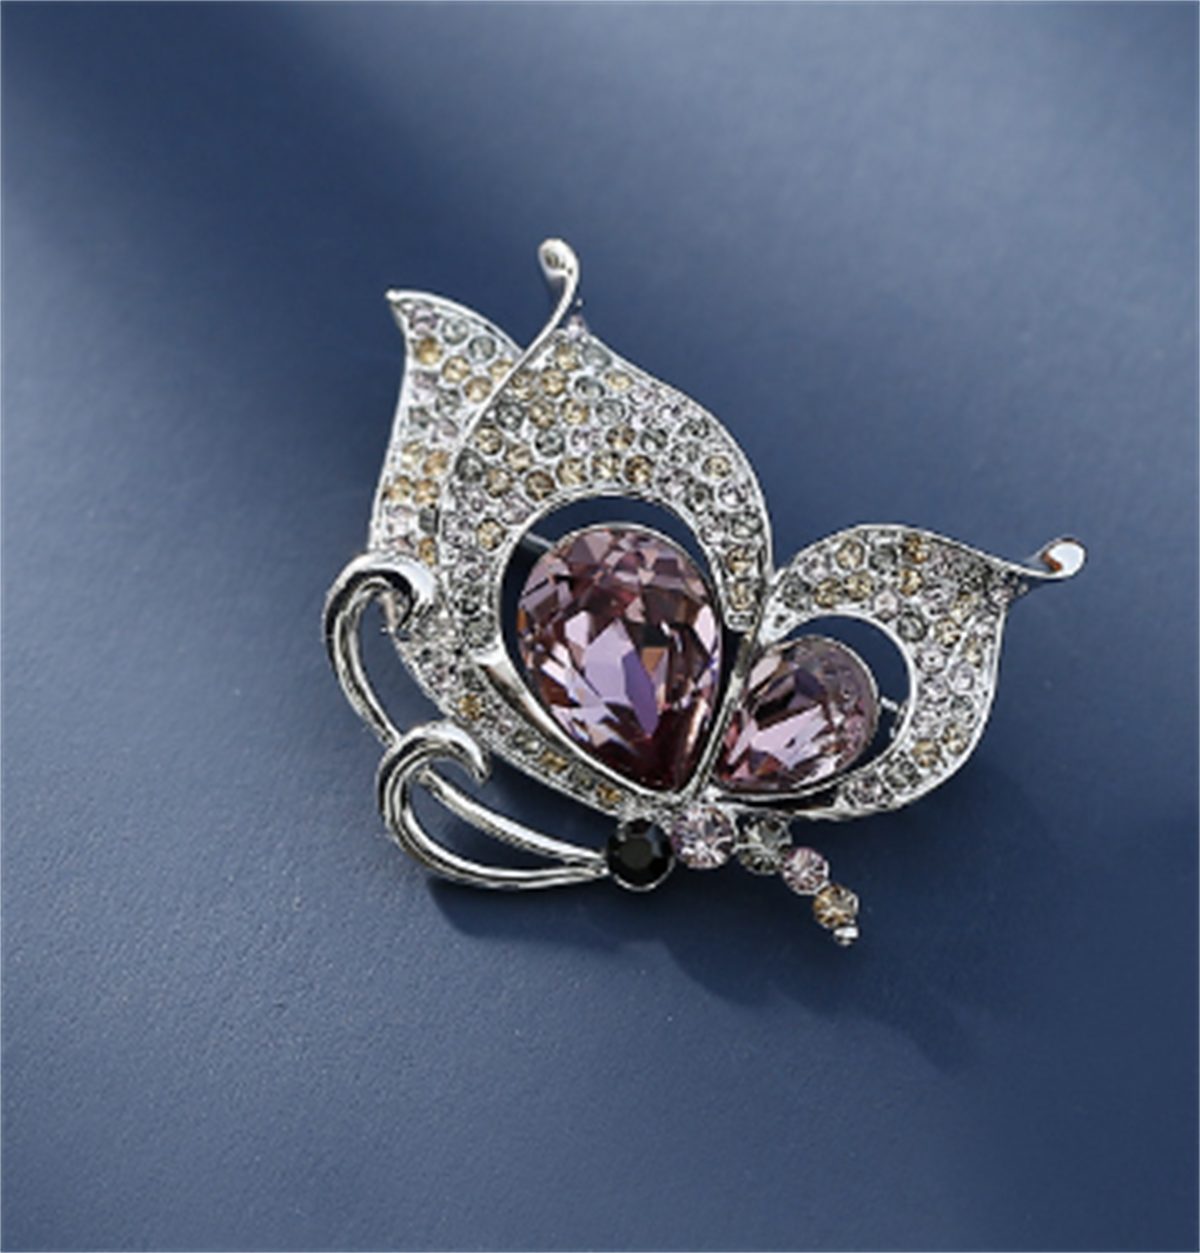 Vintage Kristall-Schmetterlings-Zirkon-Brosche Lila carefully exquisite Brosche selected wasserdichte